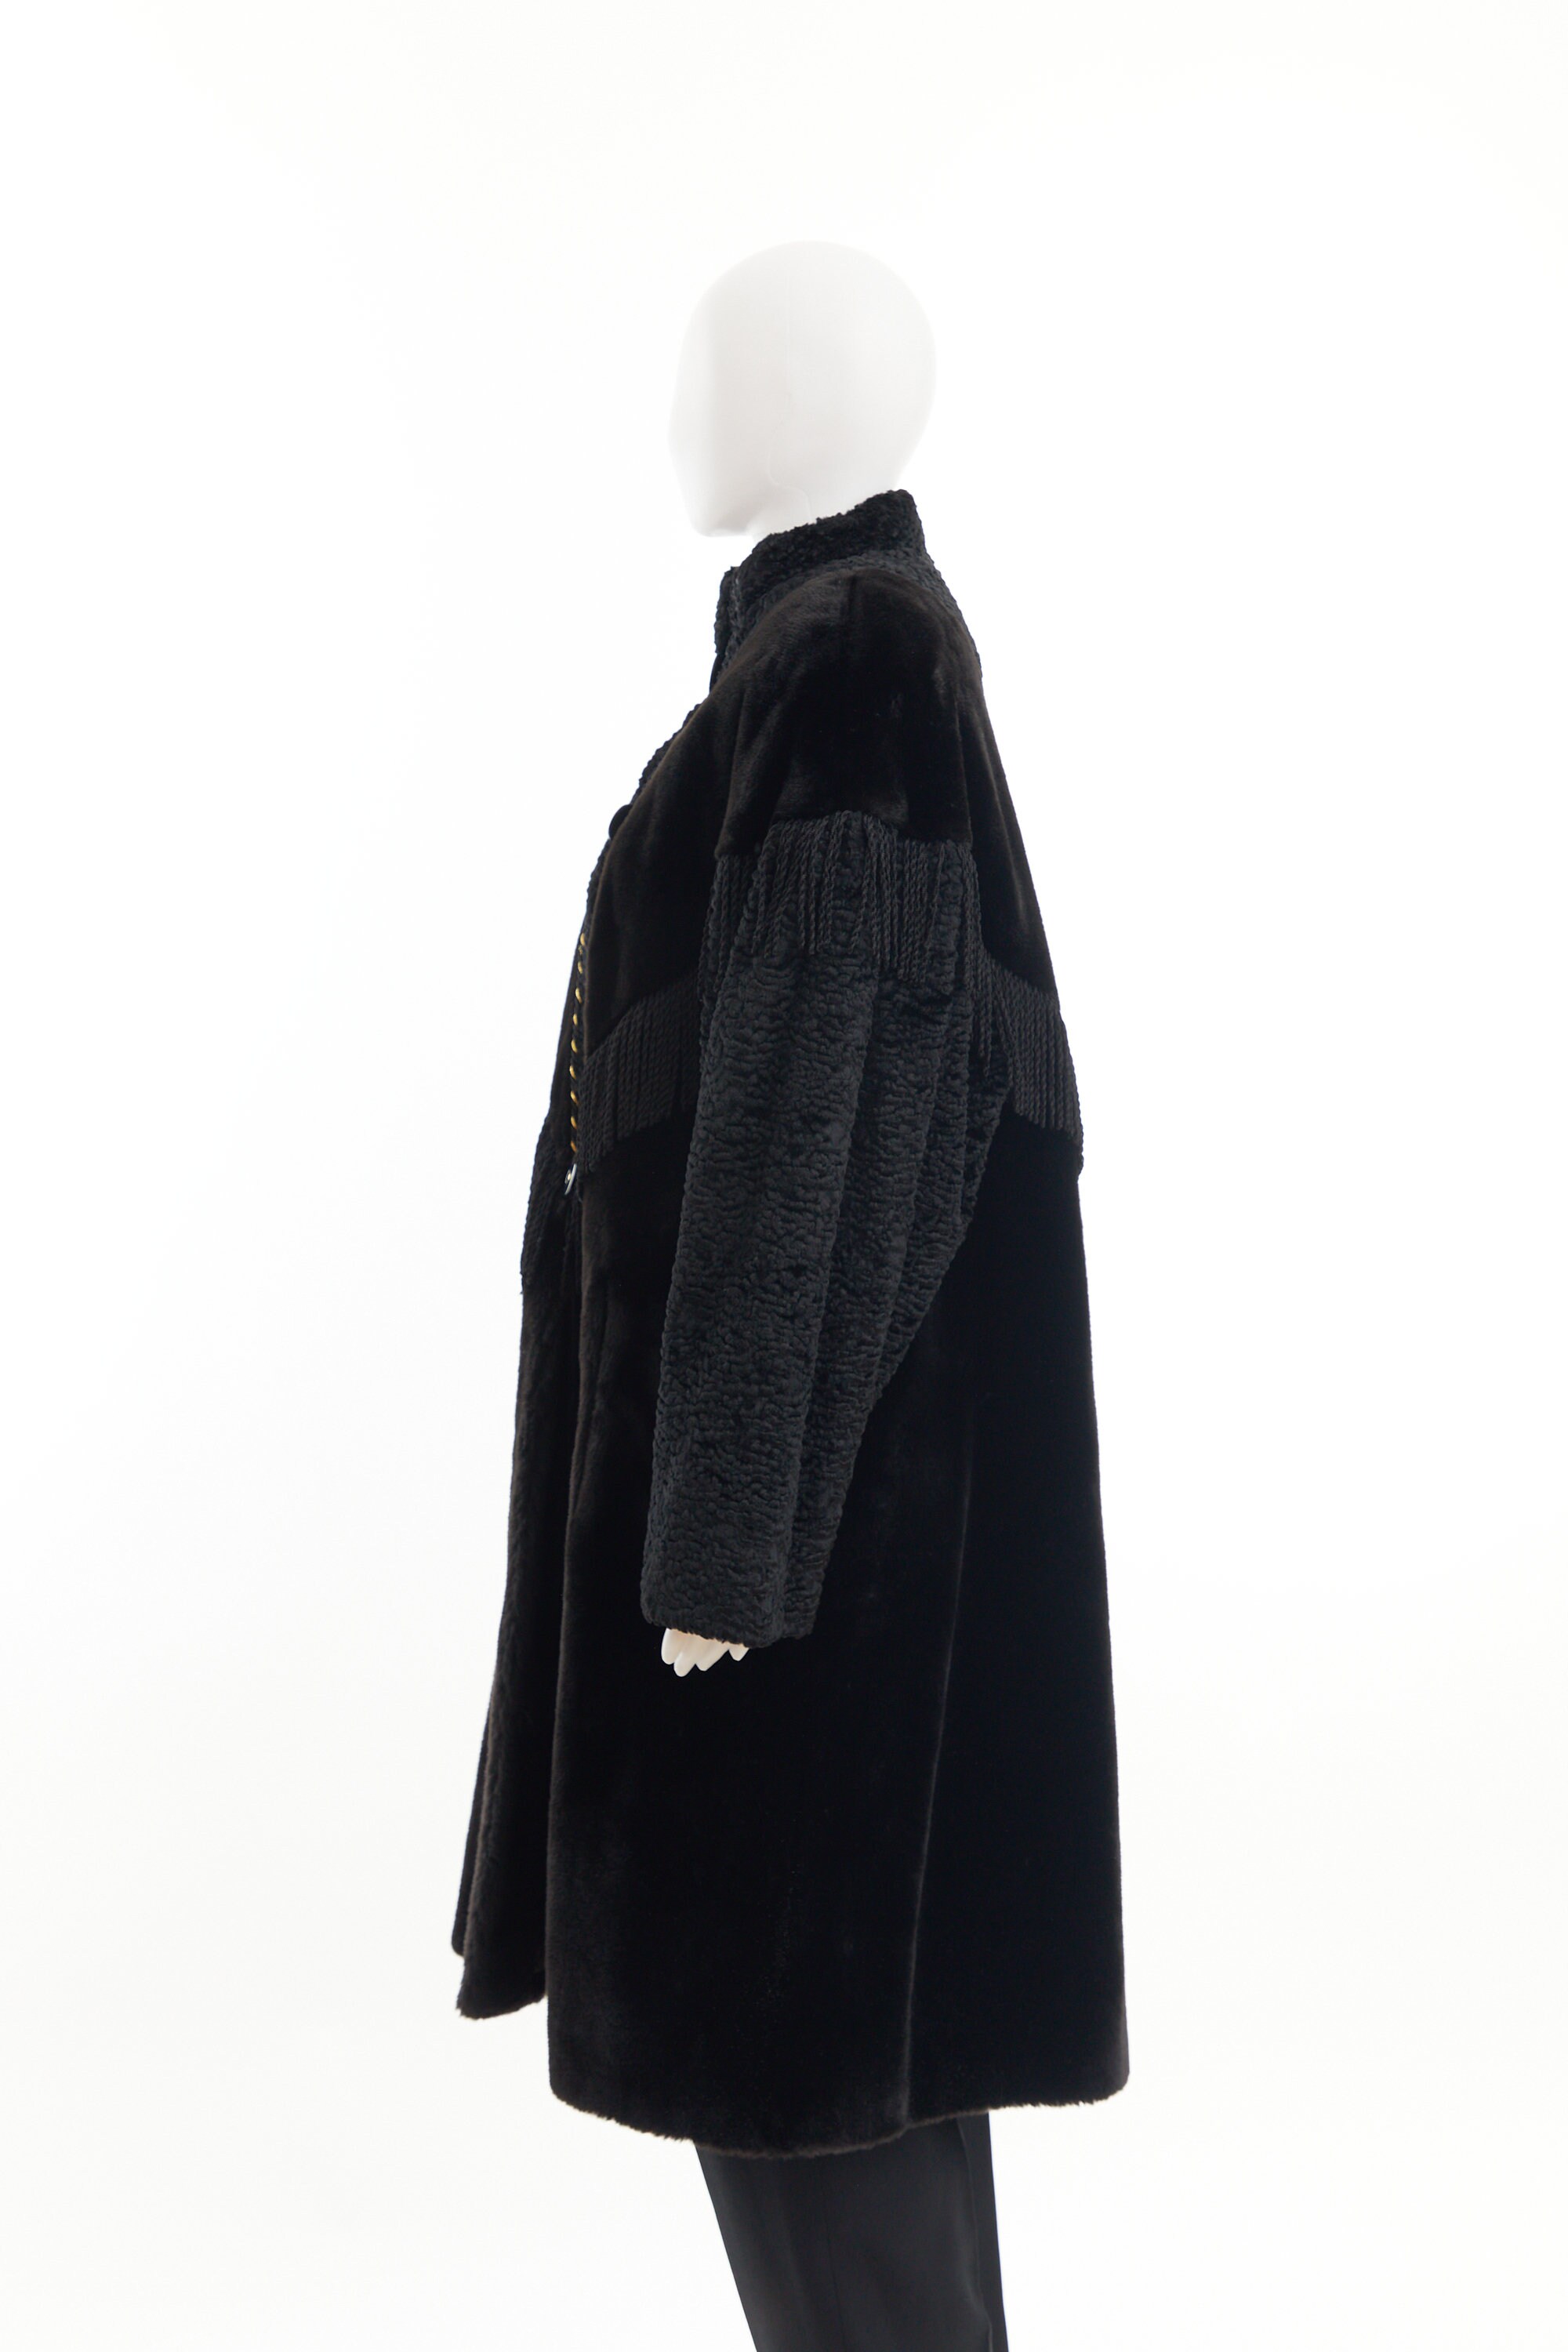 80's Black Faux Fur Coat / Fringe Coat With Gold Ribbon Detail / Medium ...